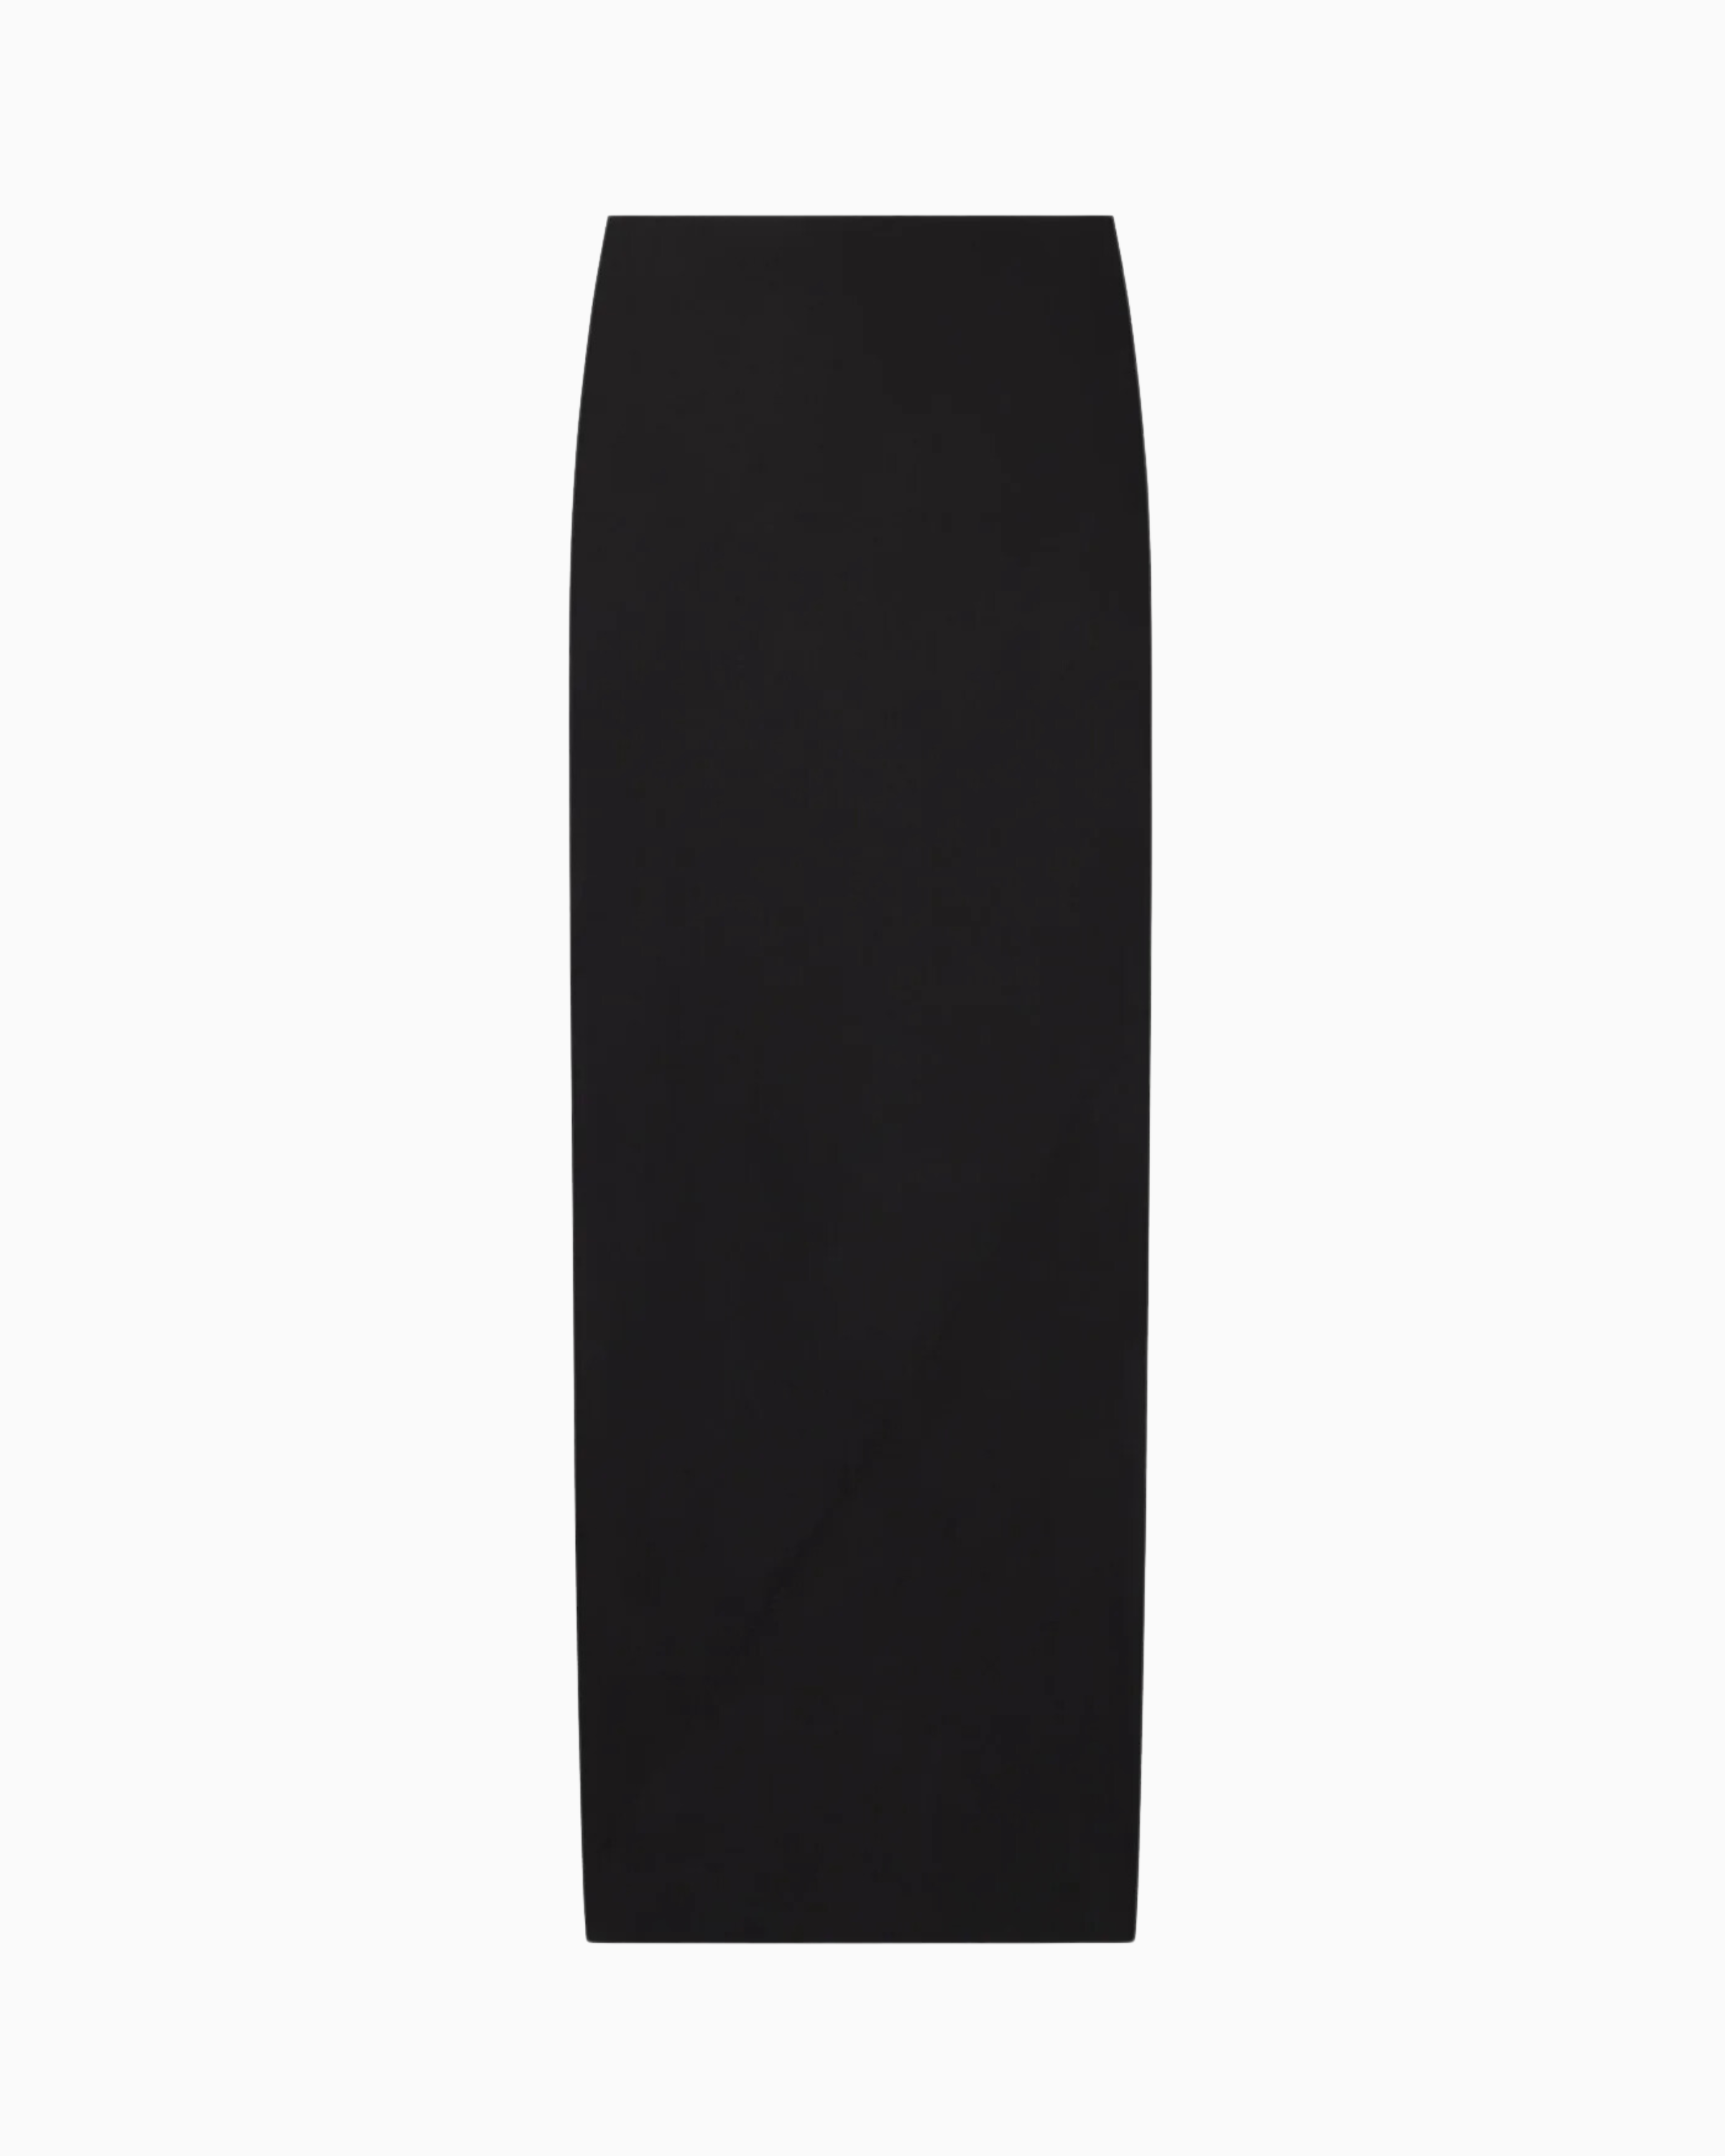 A.L.C. Greta Skirt in Black